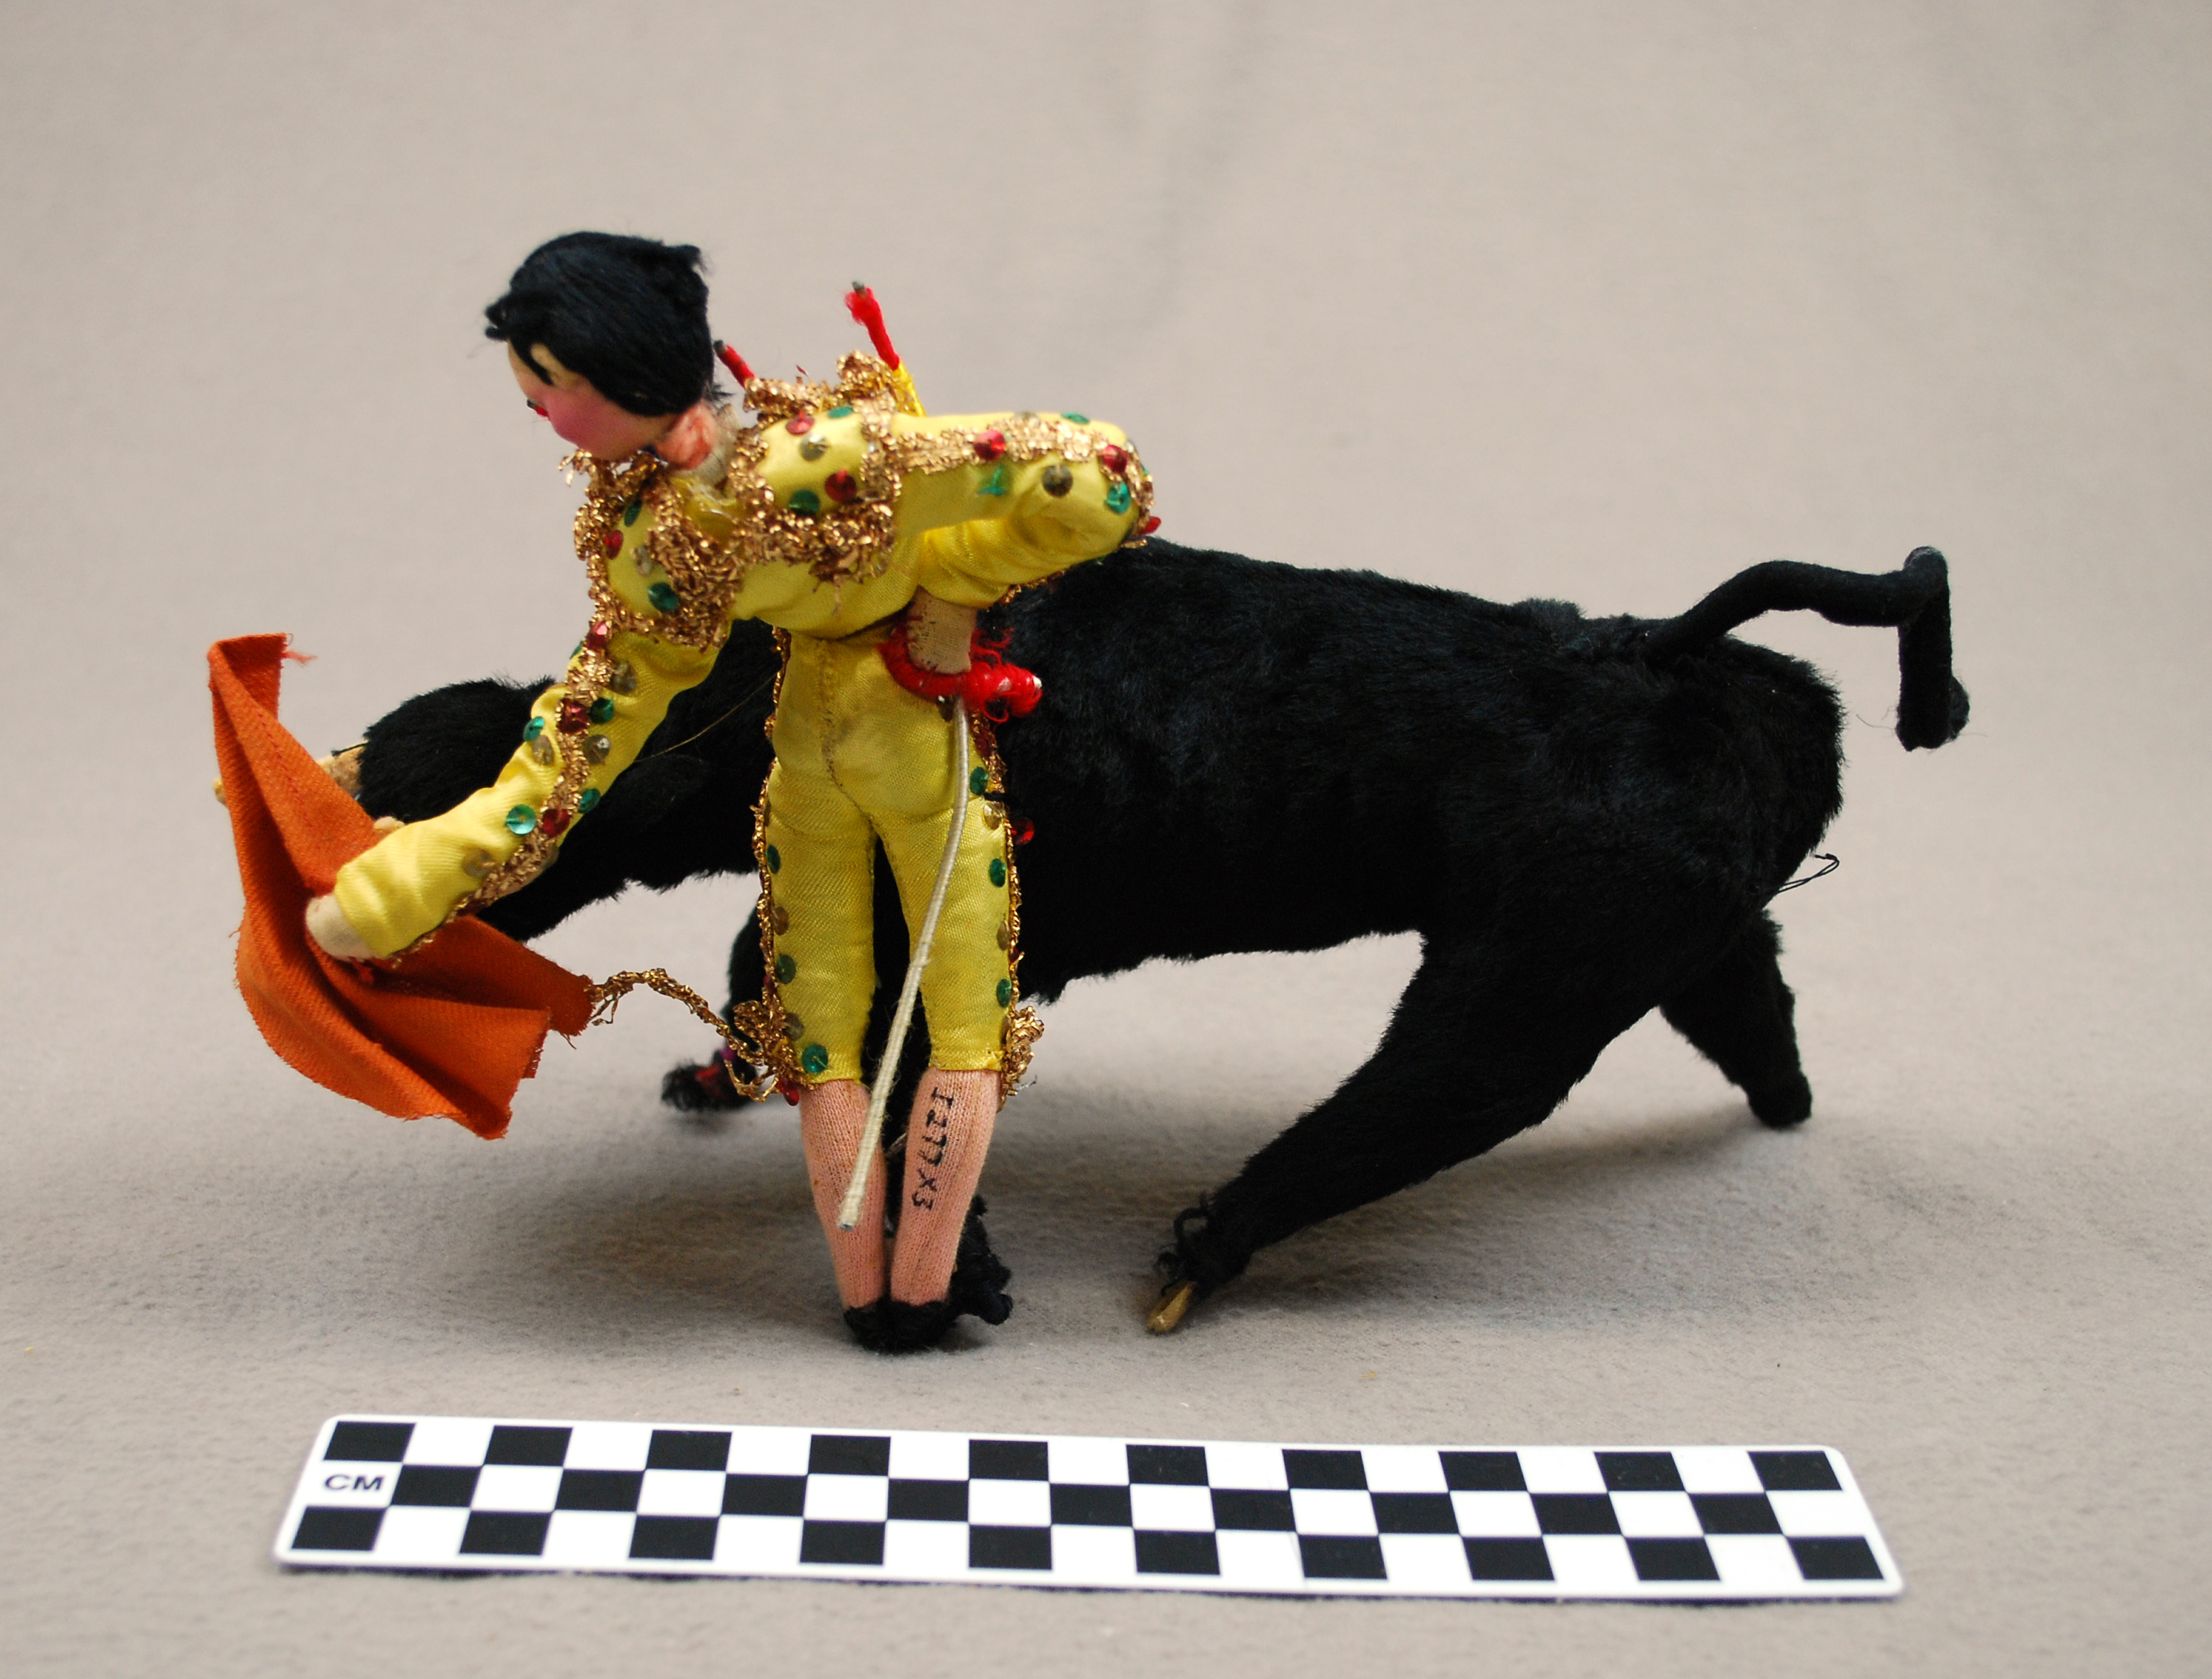 Object: Doll (bullfighter)